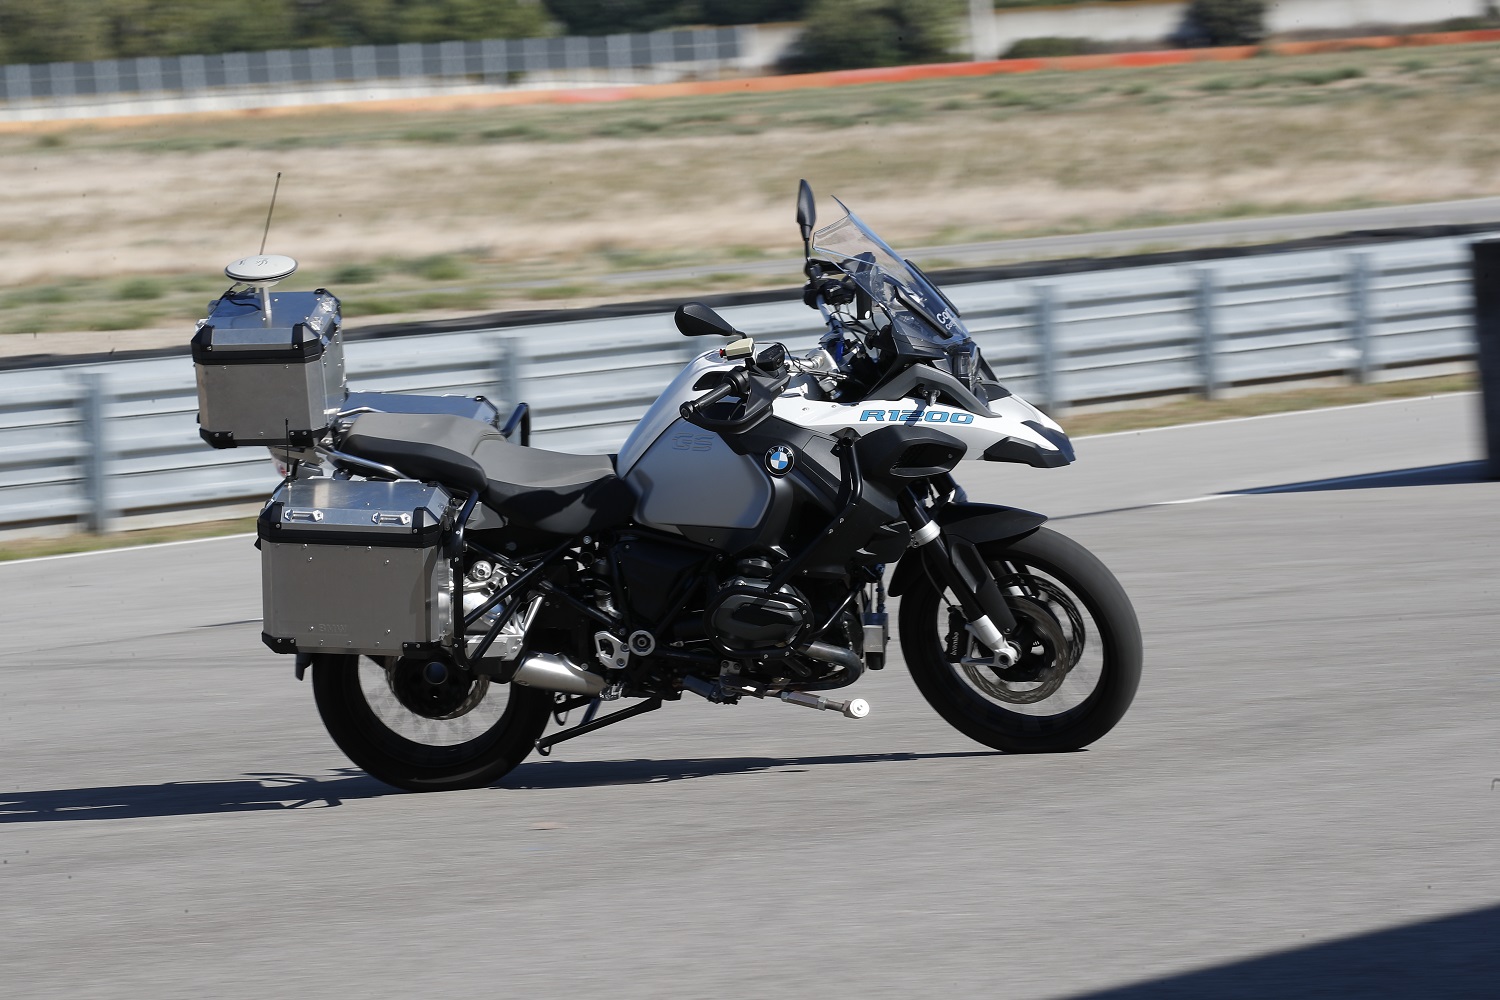 BMW's Self-Riding Motorcycle Prototype Balances Itself